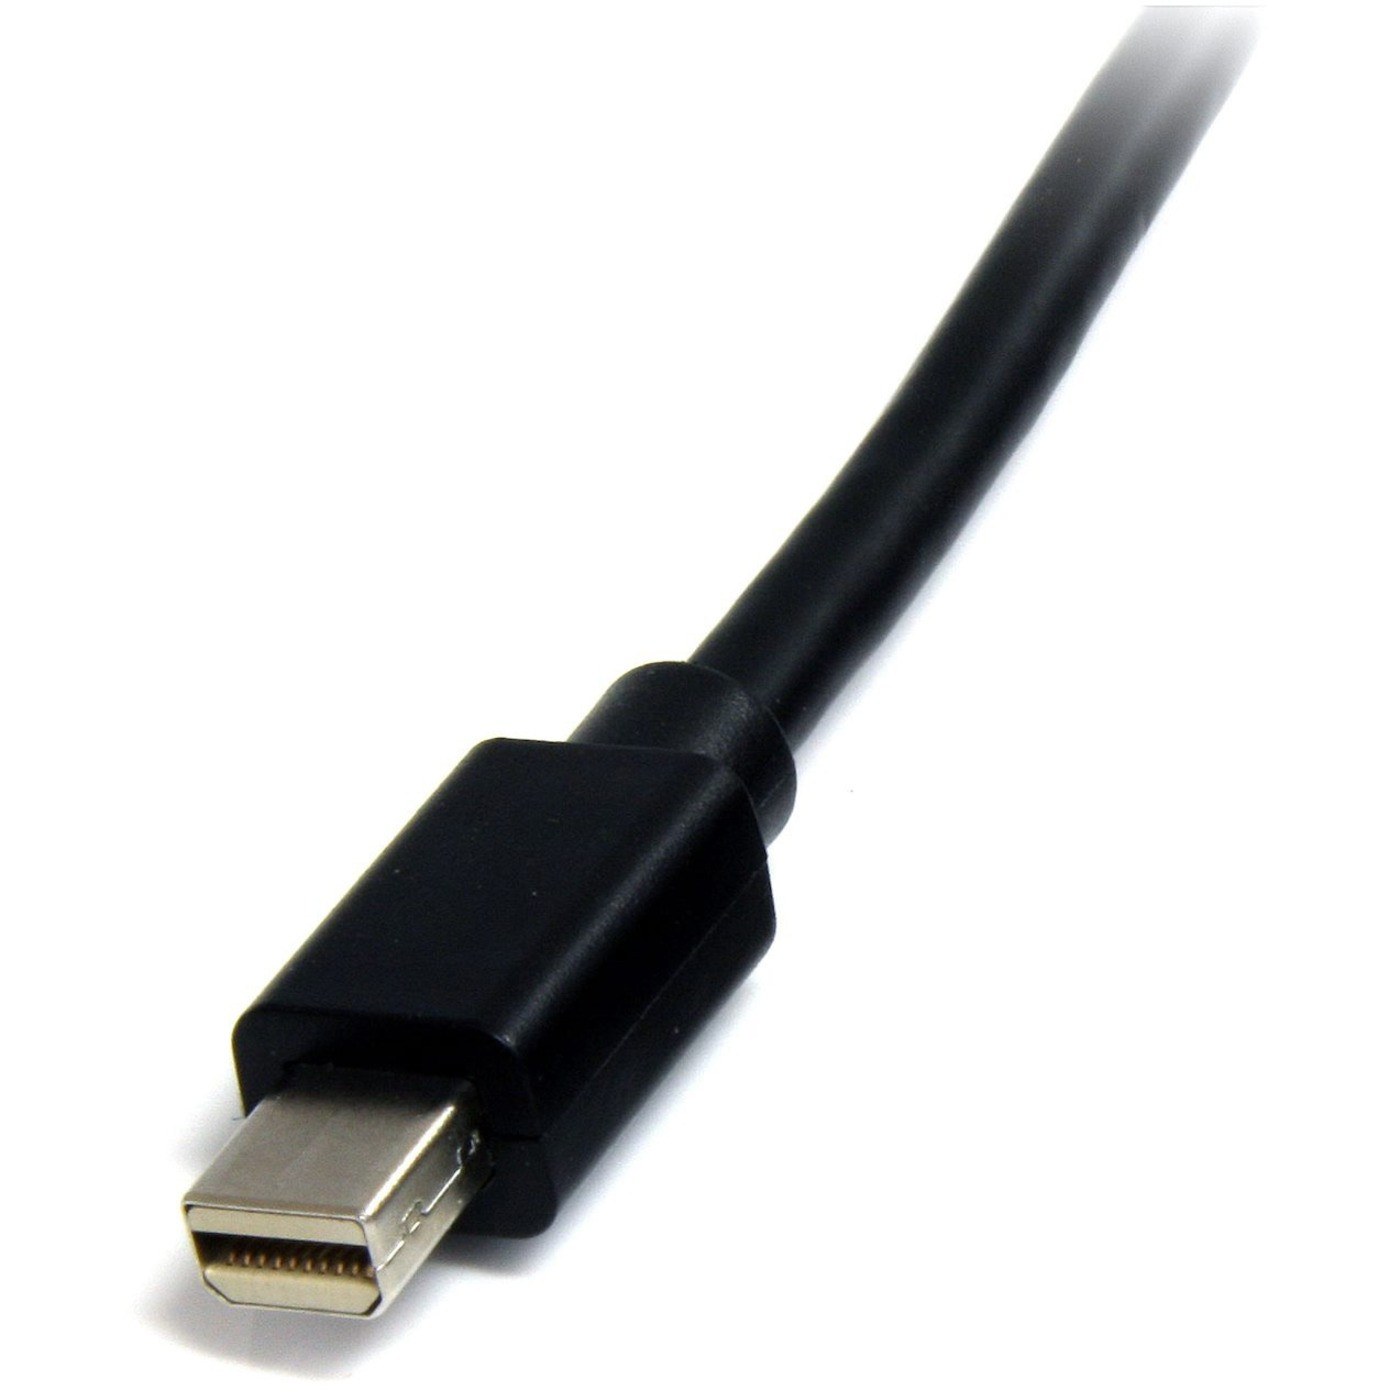 Startech .com 3ft (1m) Mini DisplayPort Cable, 4K x 2K Ultra HD Video, Mini DisplayPort 1.2 Cable, Mini DP Cable for Monitor, mDP Cord, M/M -… MDISPLPORT3